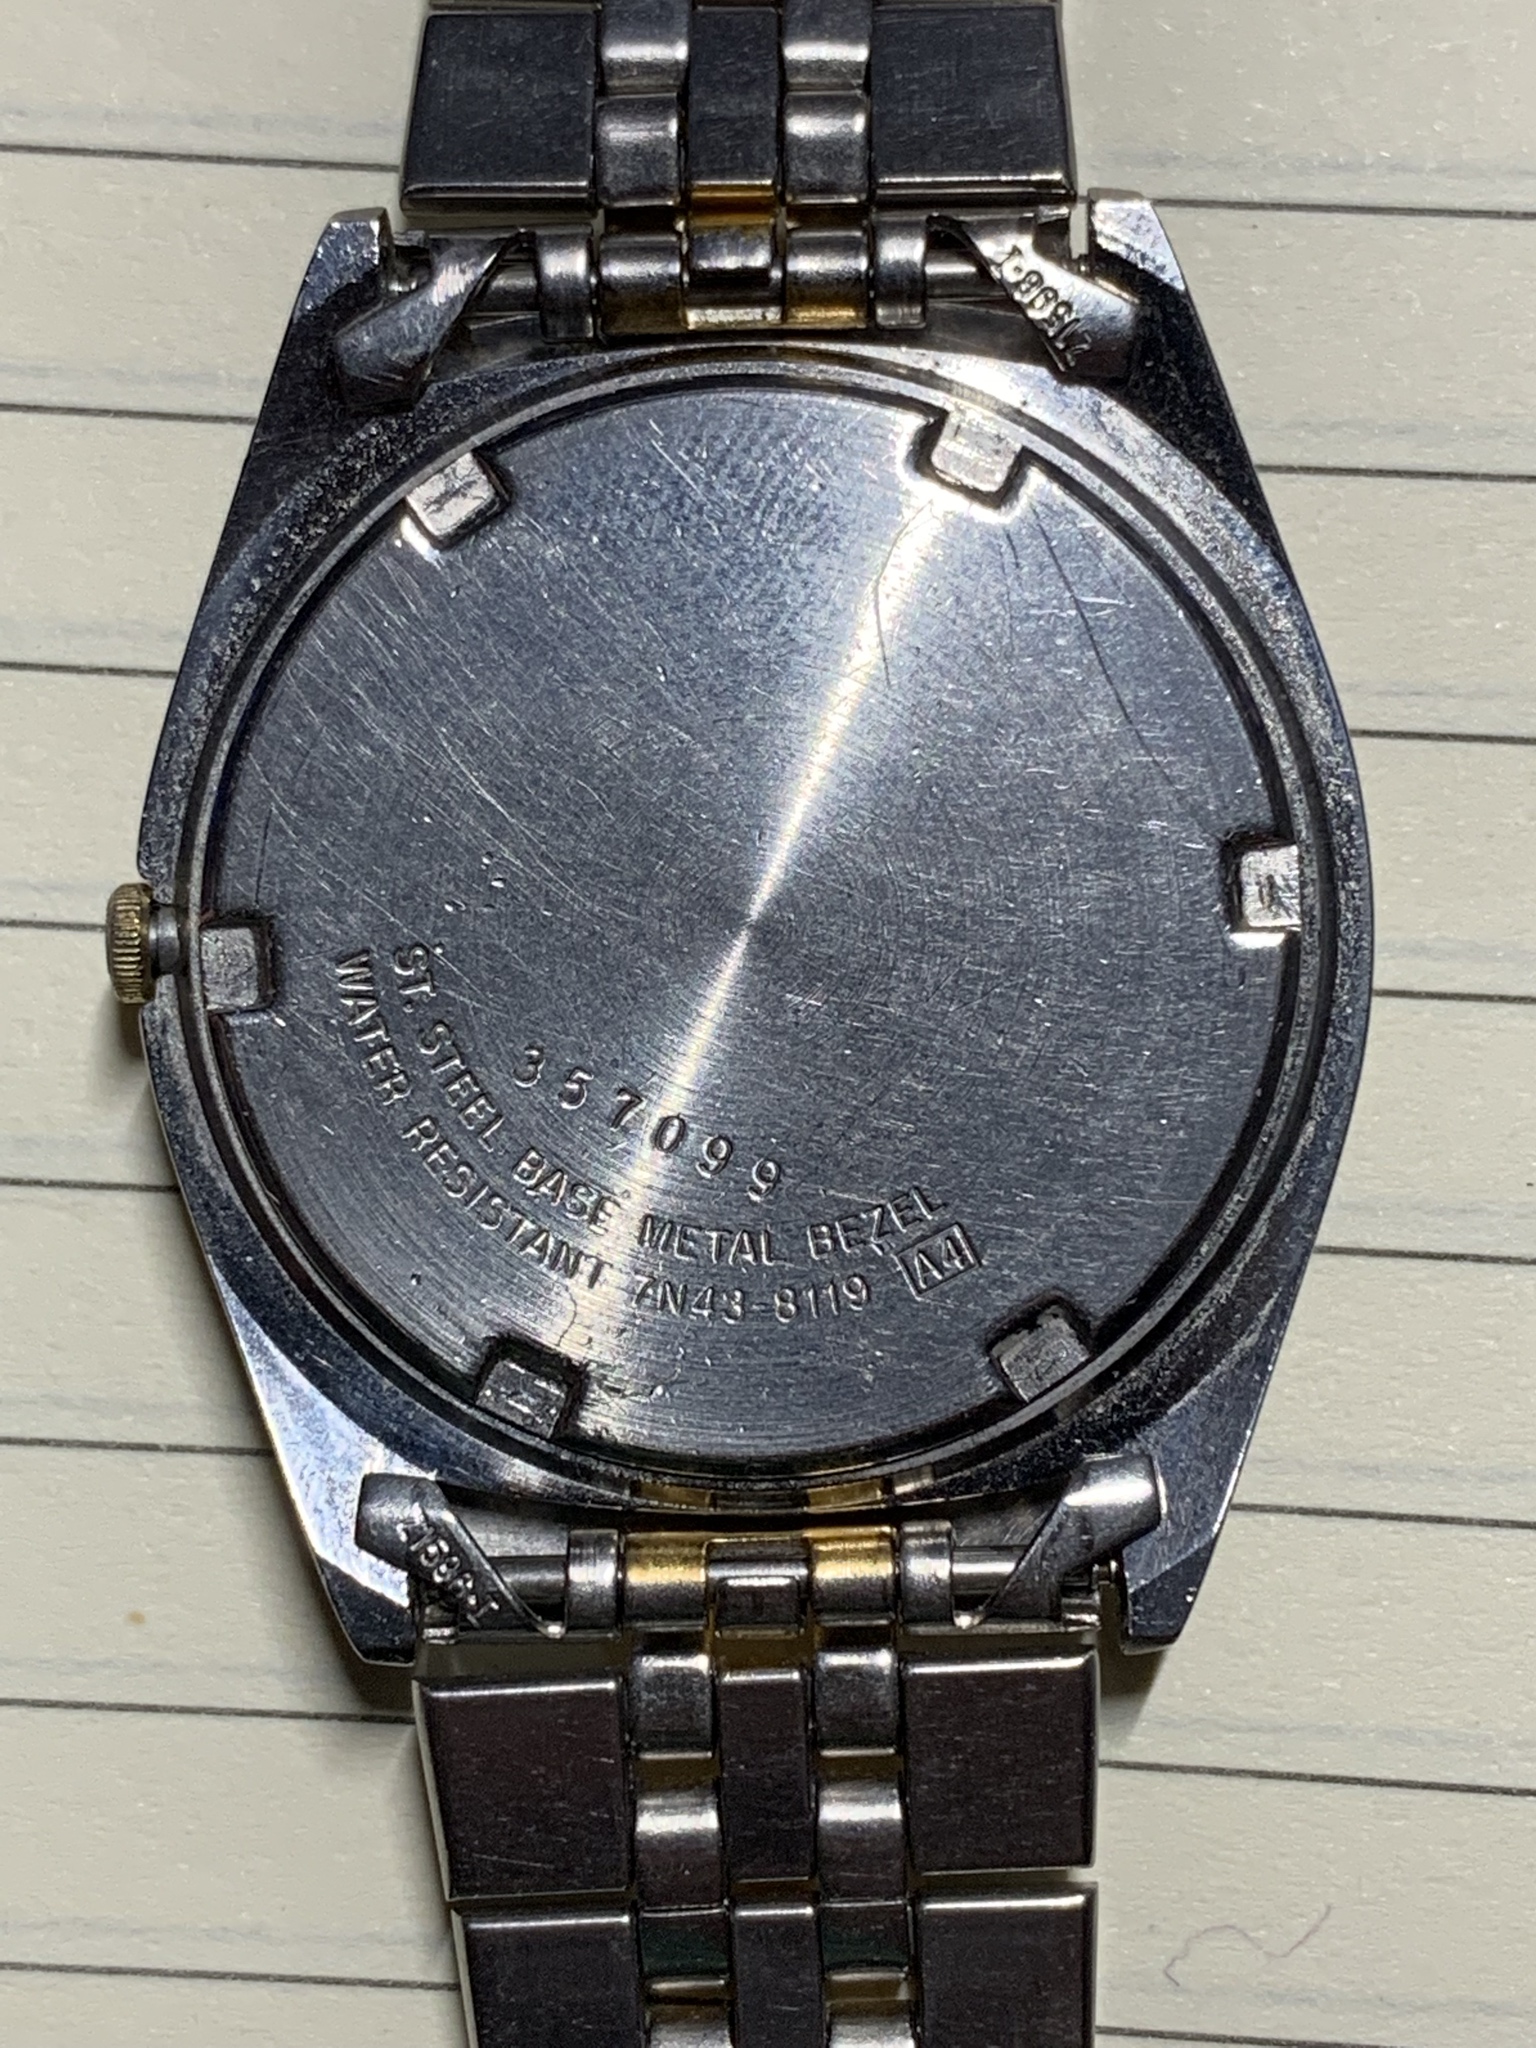 WTS] Seiko 7N43-8119 Two Tone Dress Watch | WatchCharts